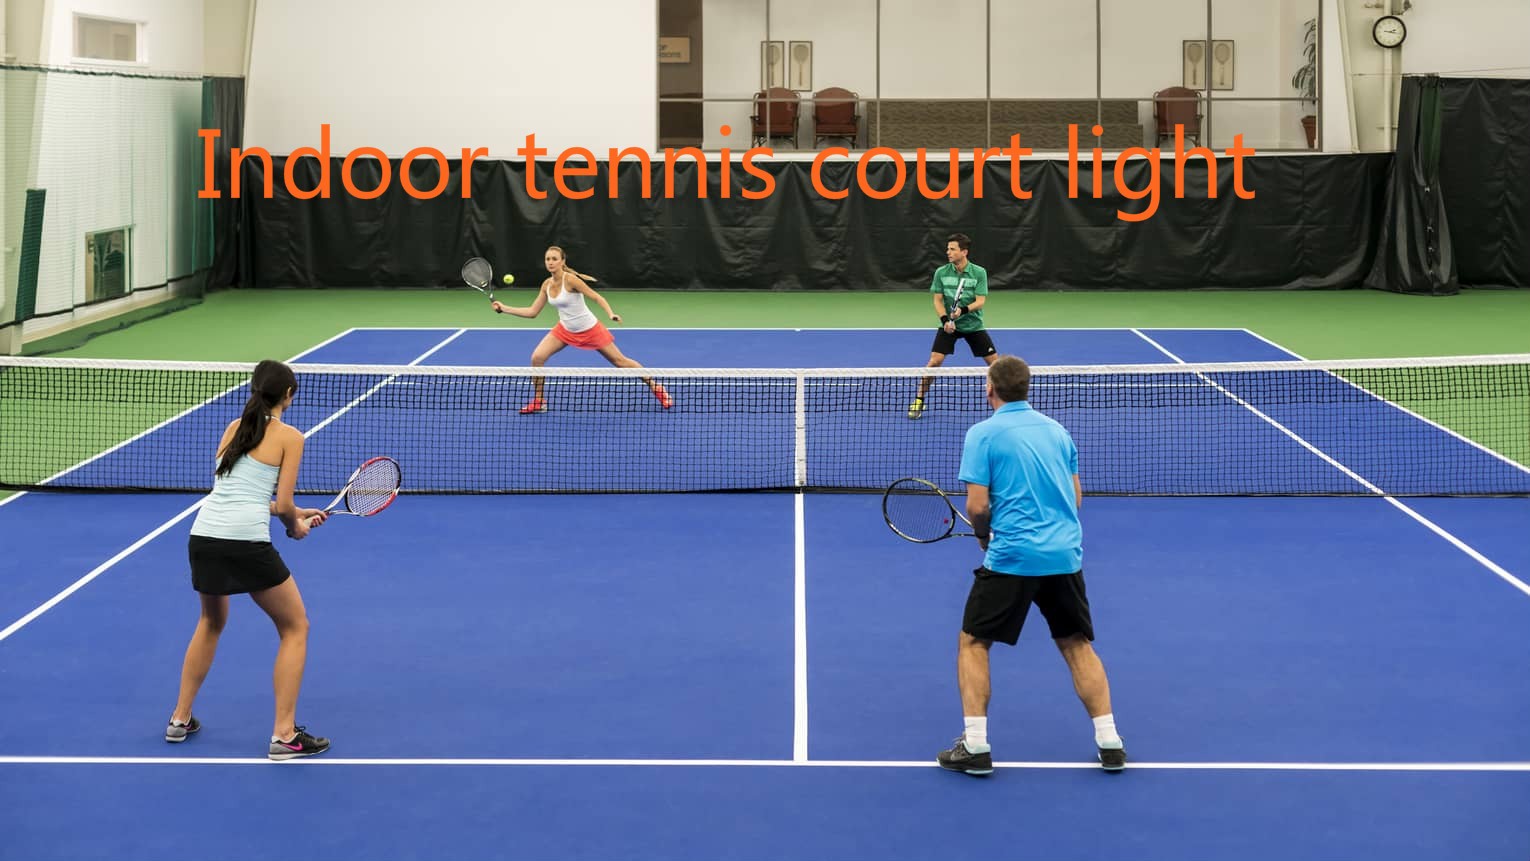 Indoor tennis light case-Netherlands national team training courts Green Light